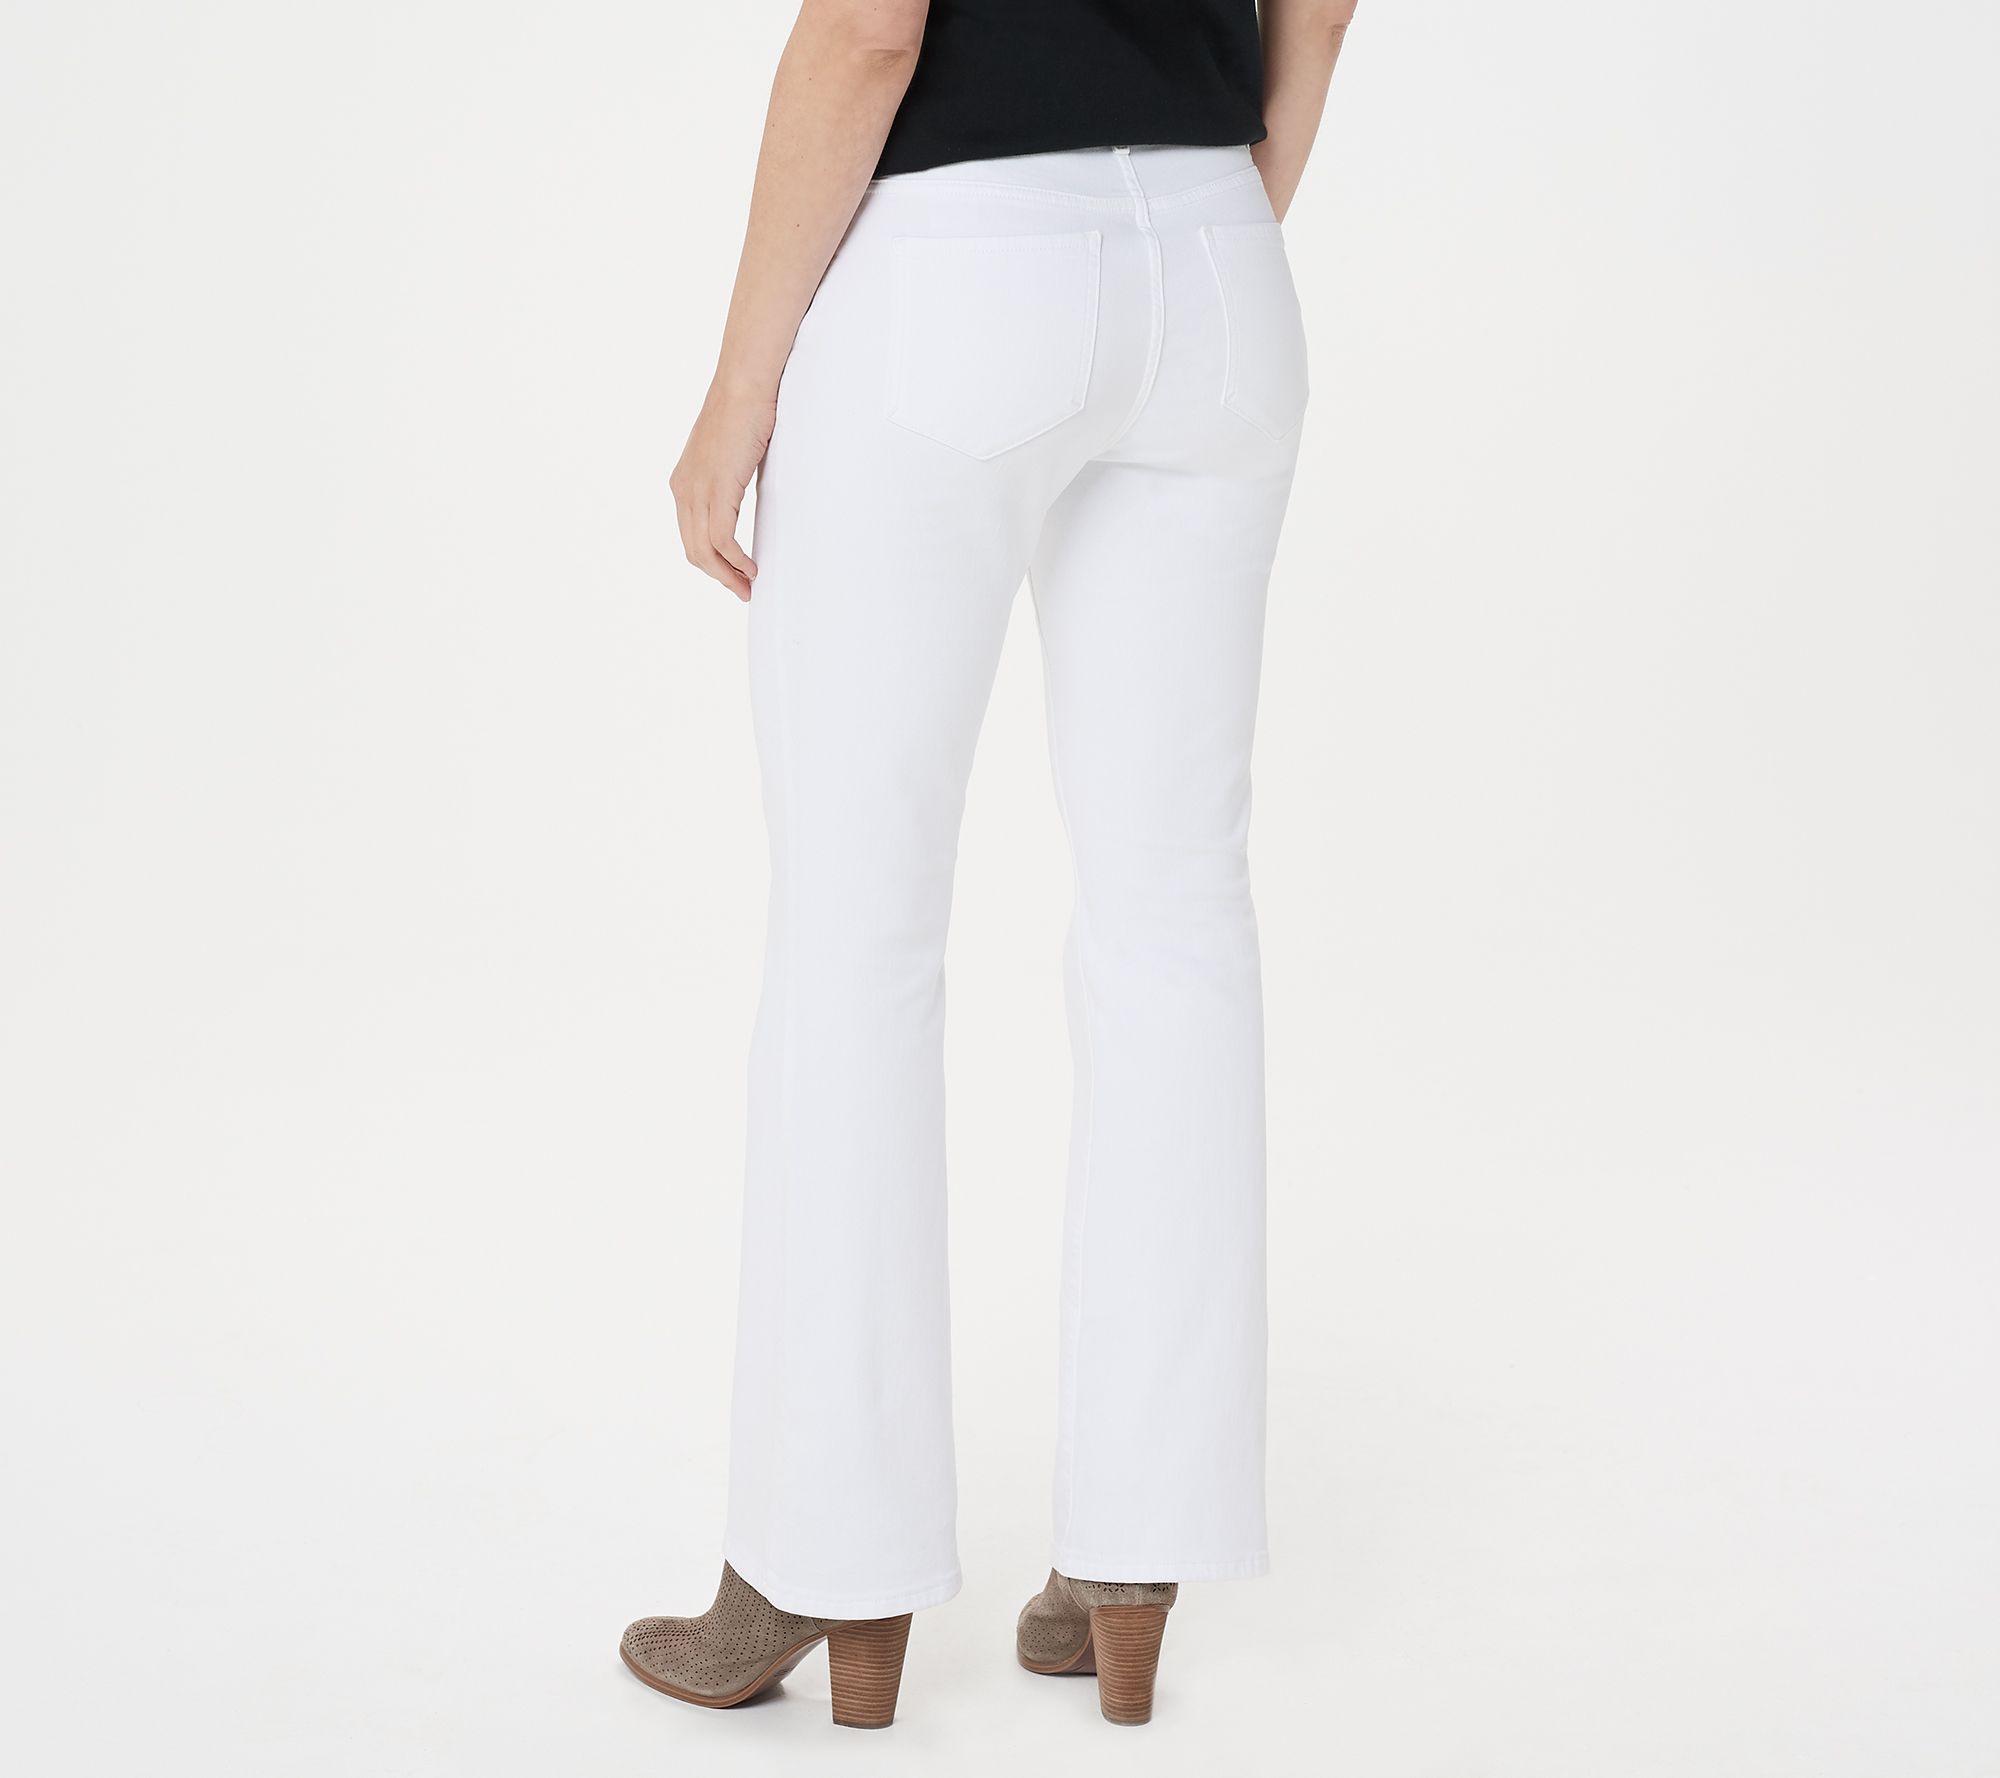 BROOKE SHIELDS Timeless Regular Flare Jeans -White - QVC.com